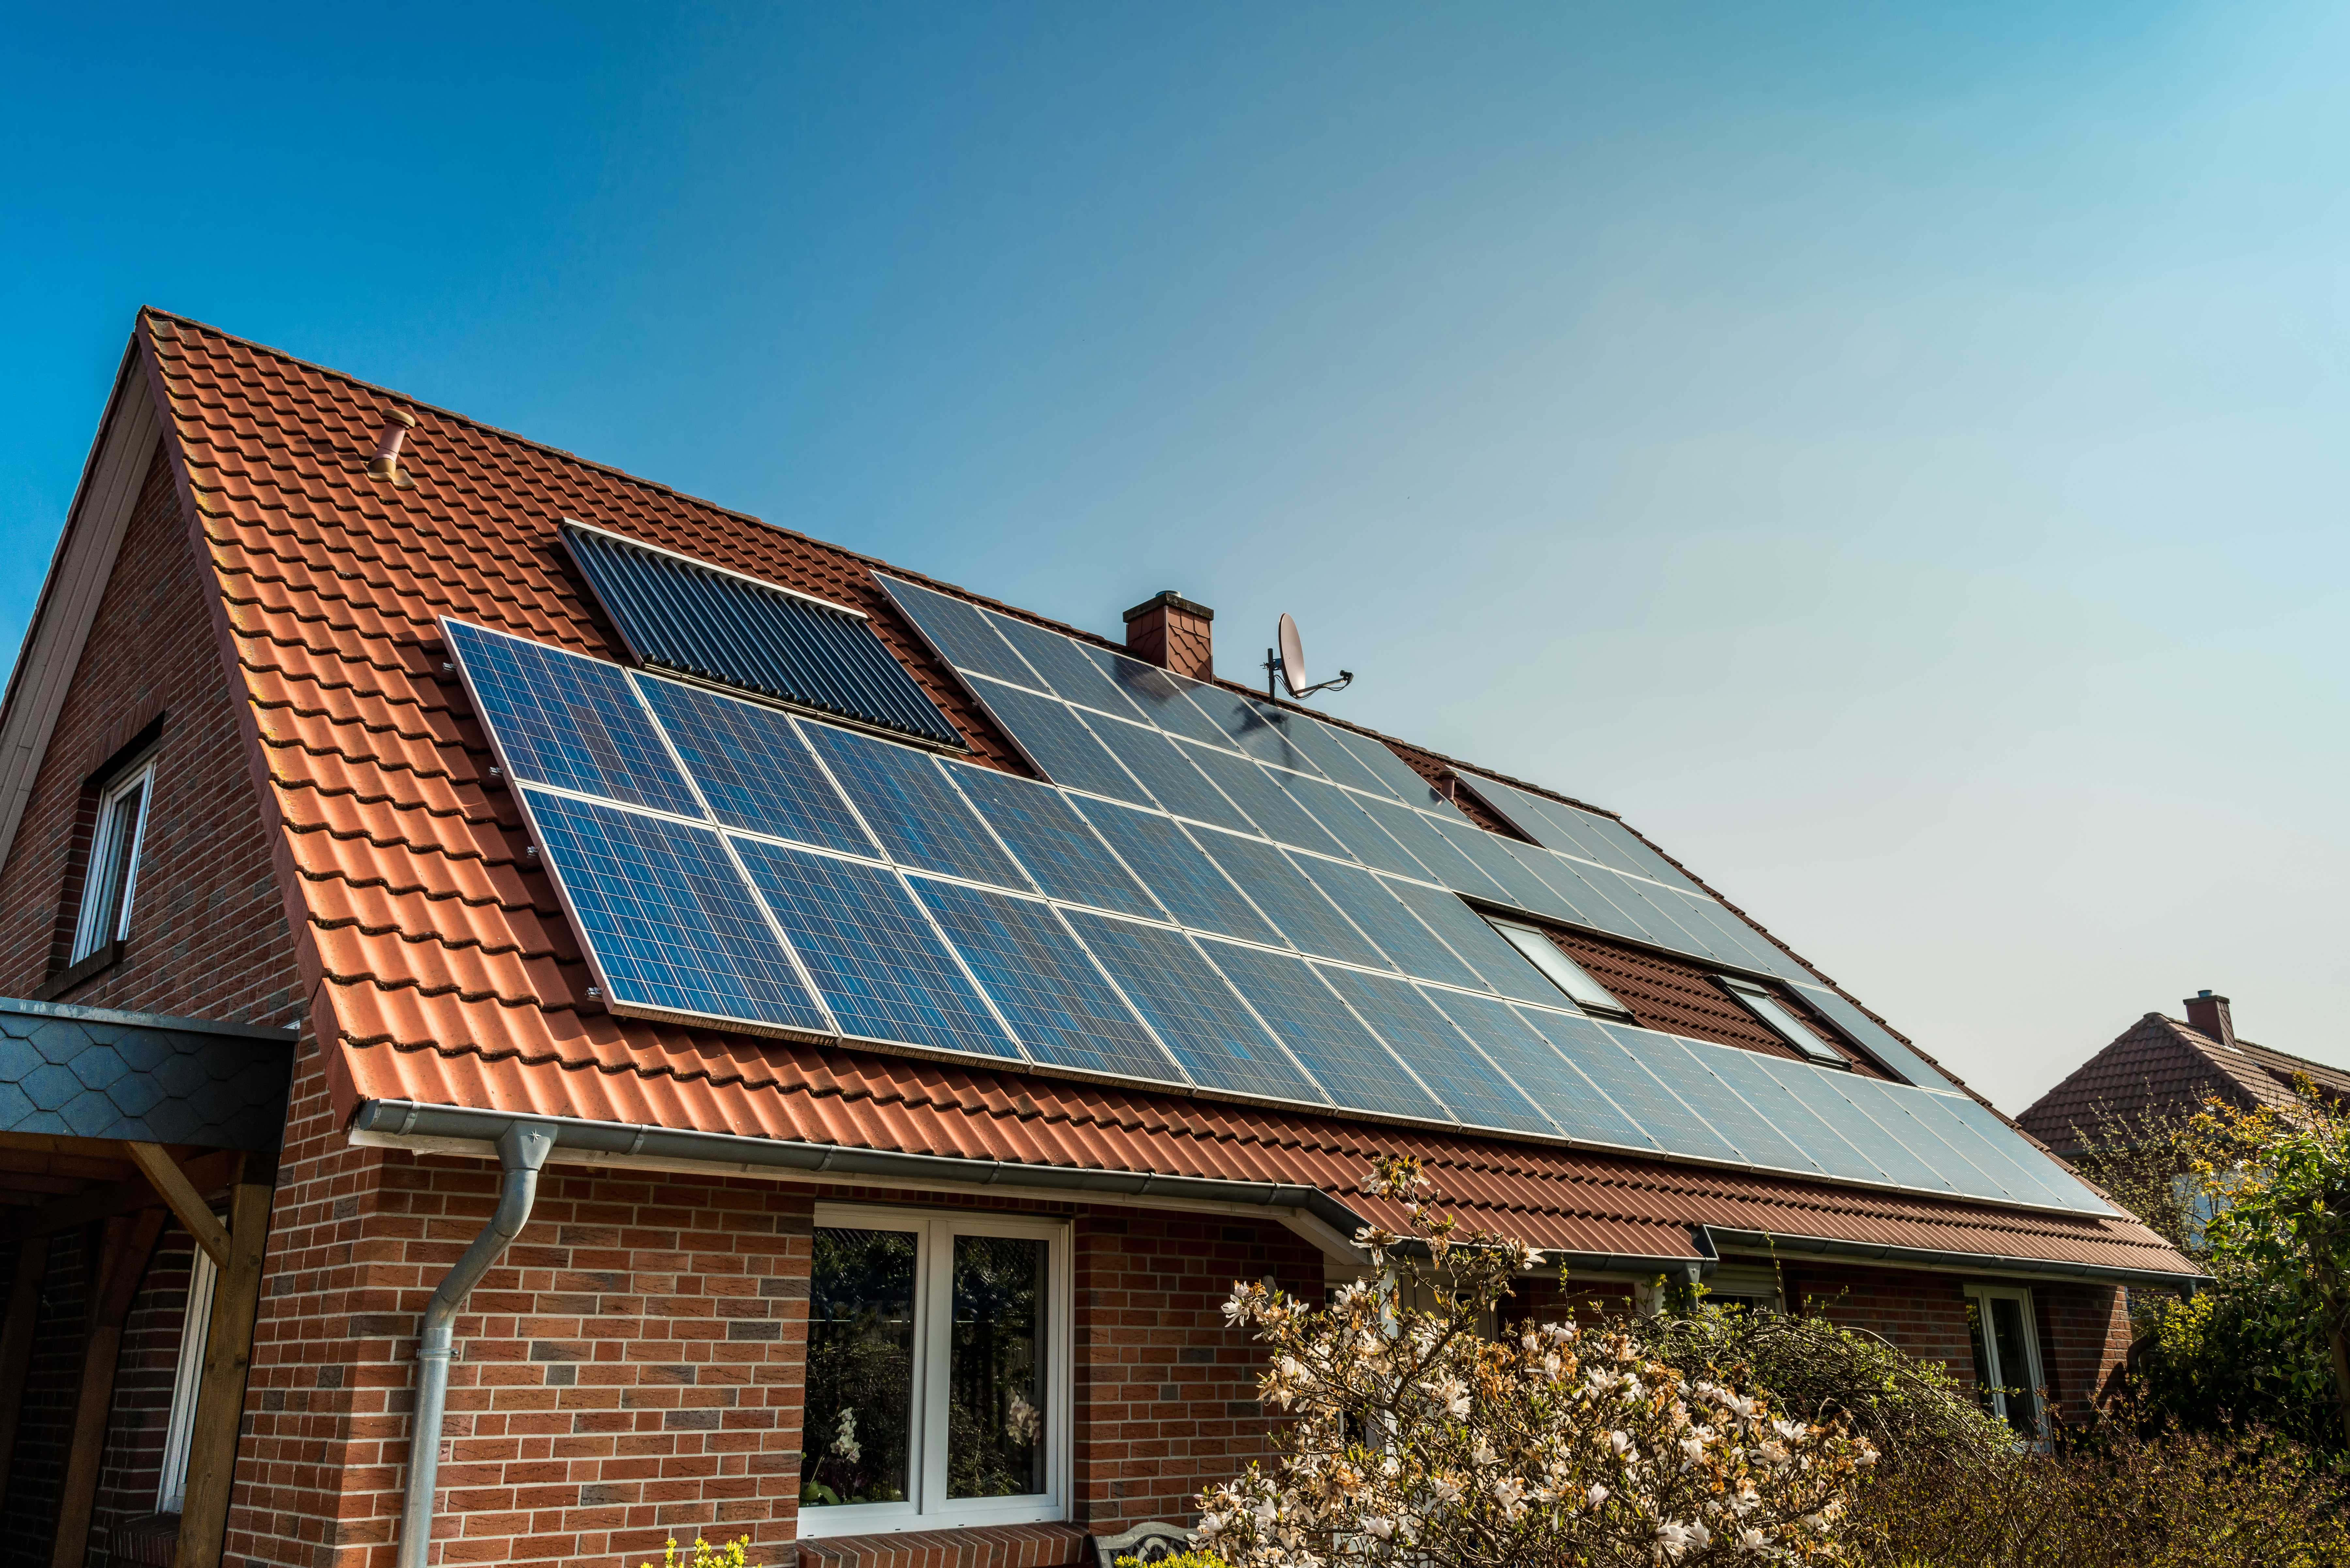 Installing solar panels on a rental property